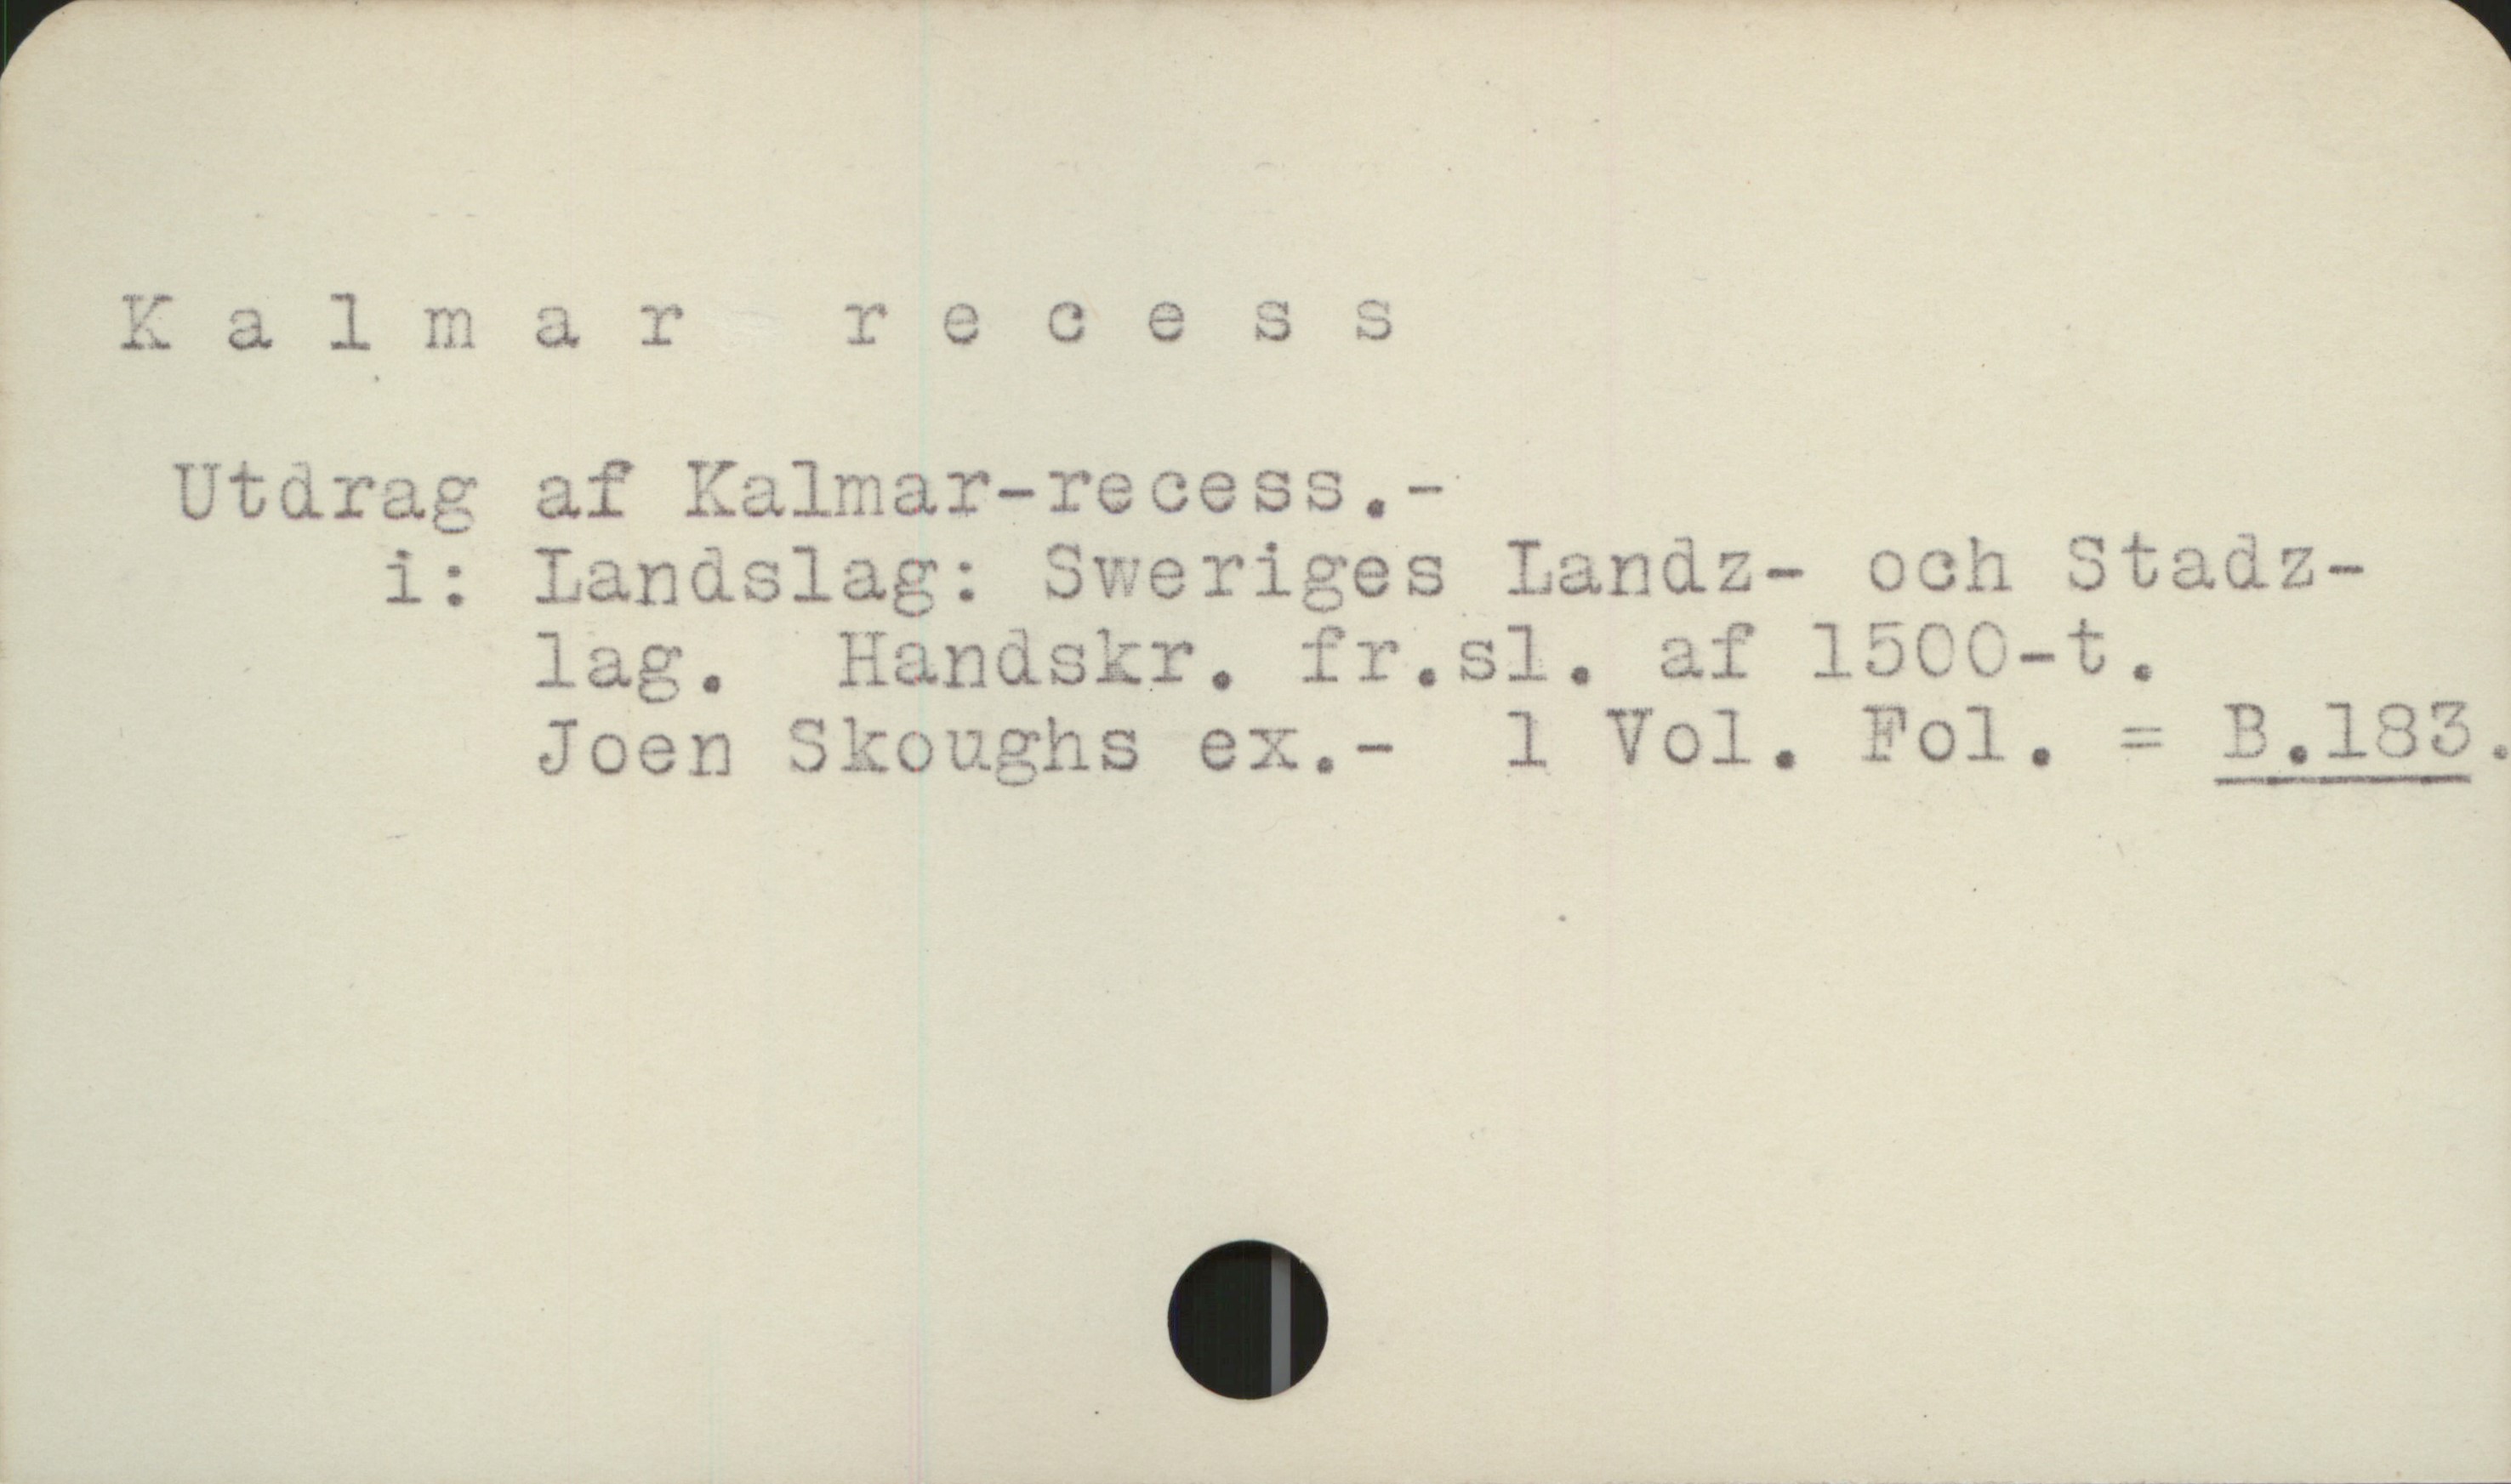  X. alma T T 0 a e 3 5
Utarag af Kalmar-recess.-
i:; Lanäslag: Sveriges Landz- och 3tadz-
lag.  KEandskr. fr.sl. af 15C0-t.
Joen Skouzhs ex.- 1 Vol., "ol. - P,132.

